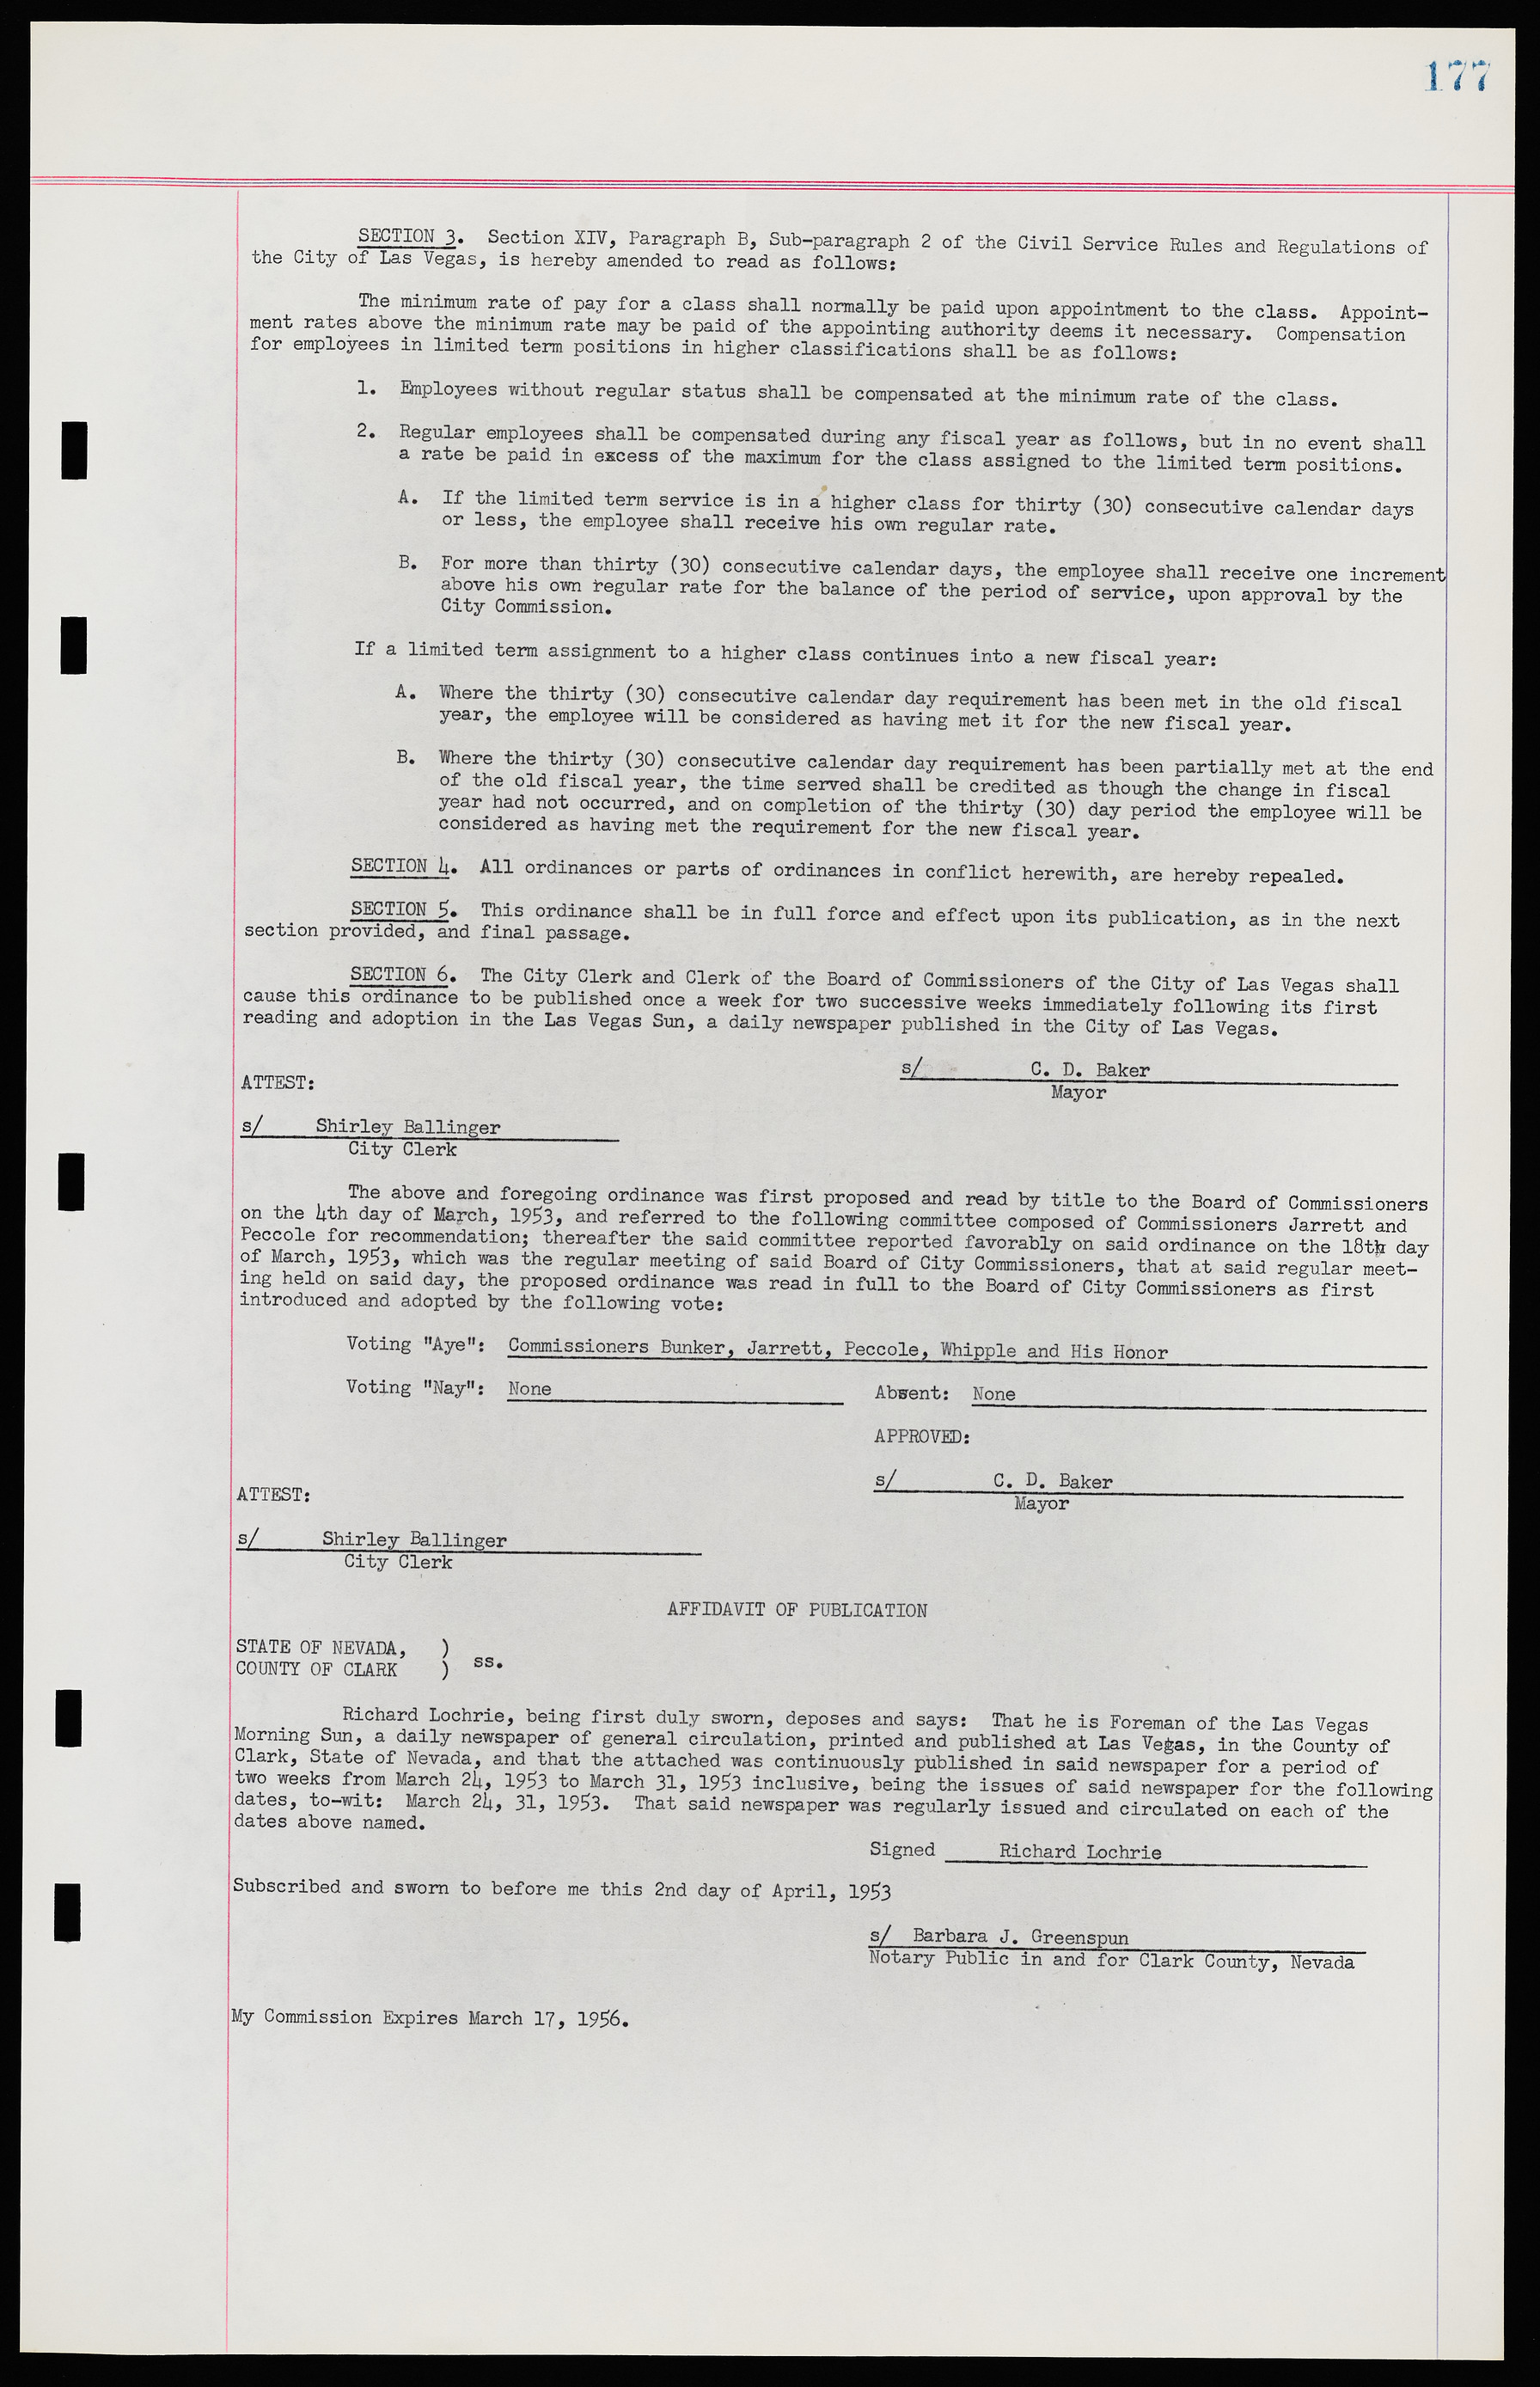 Las Vegas City Ordinances, November 13, 1950 to August 6, 1958, lvc000015-185